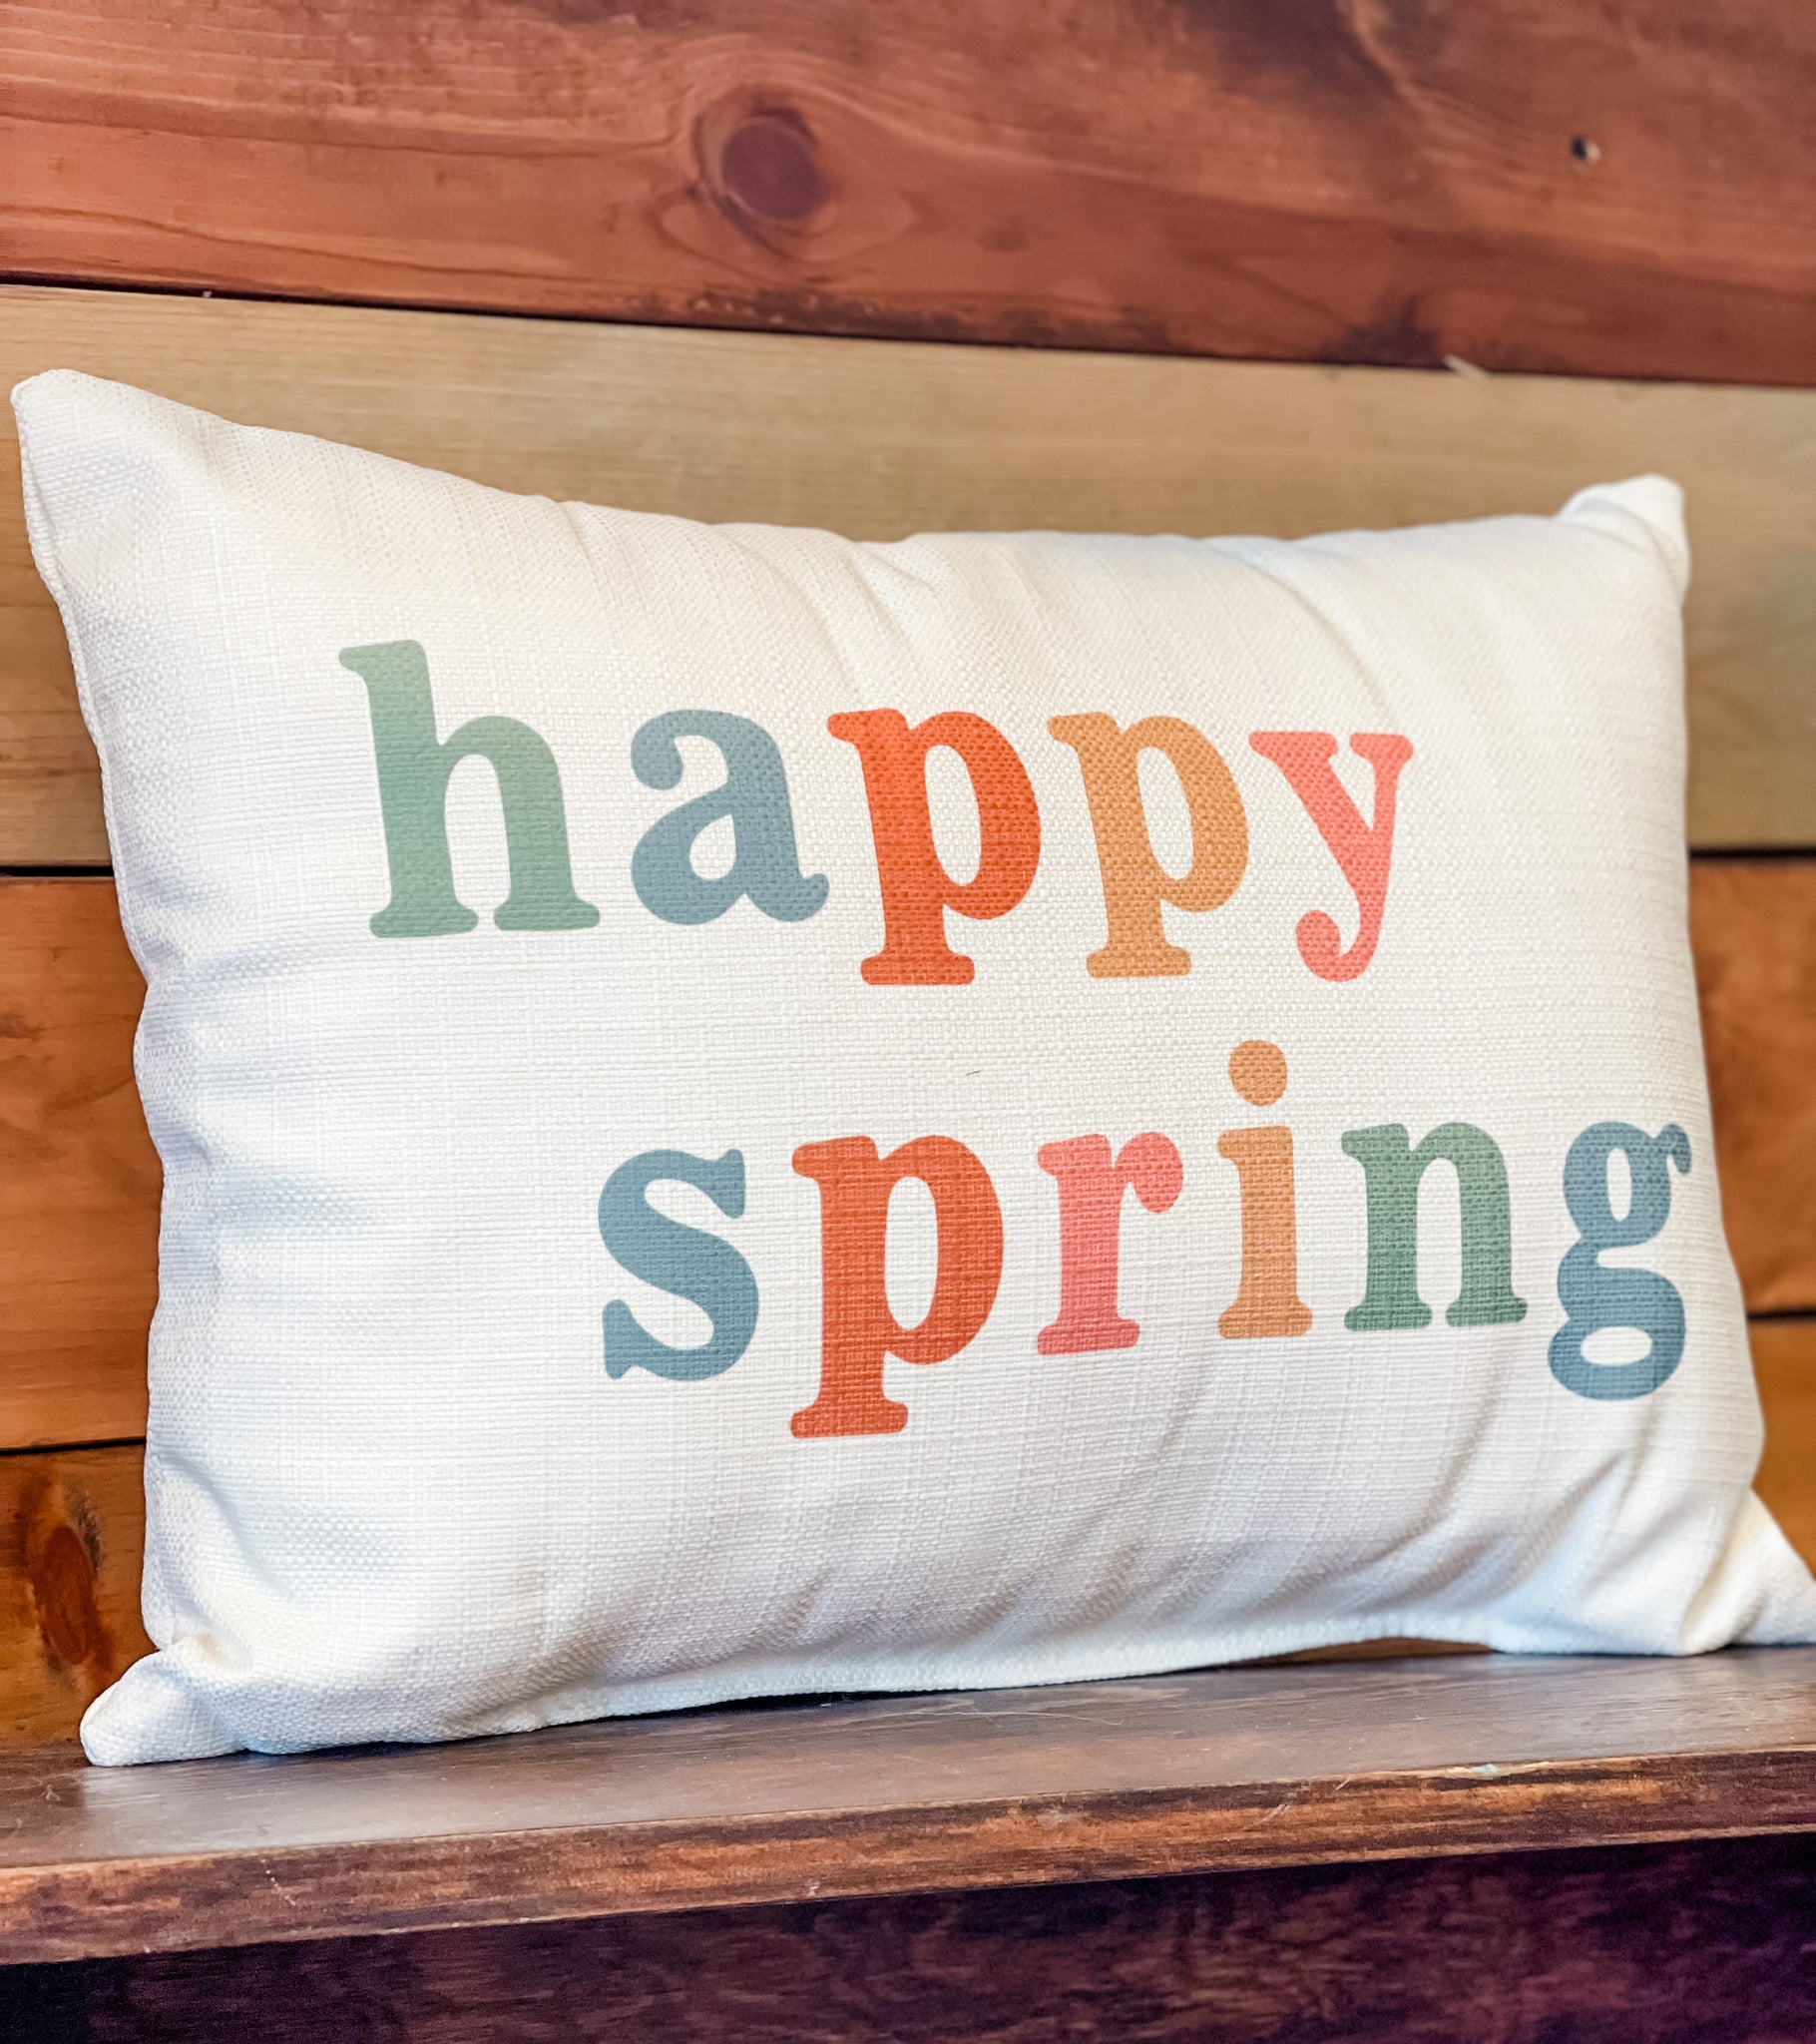 Happy Spring Multi Pillow